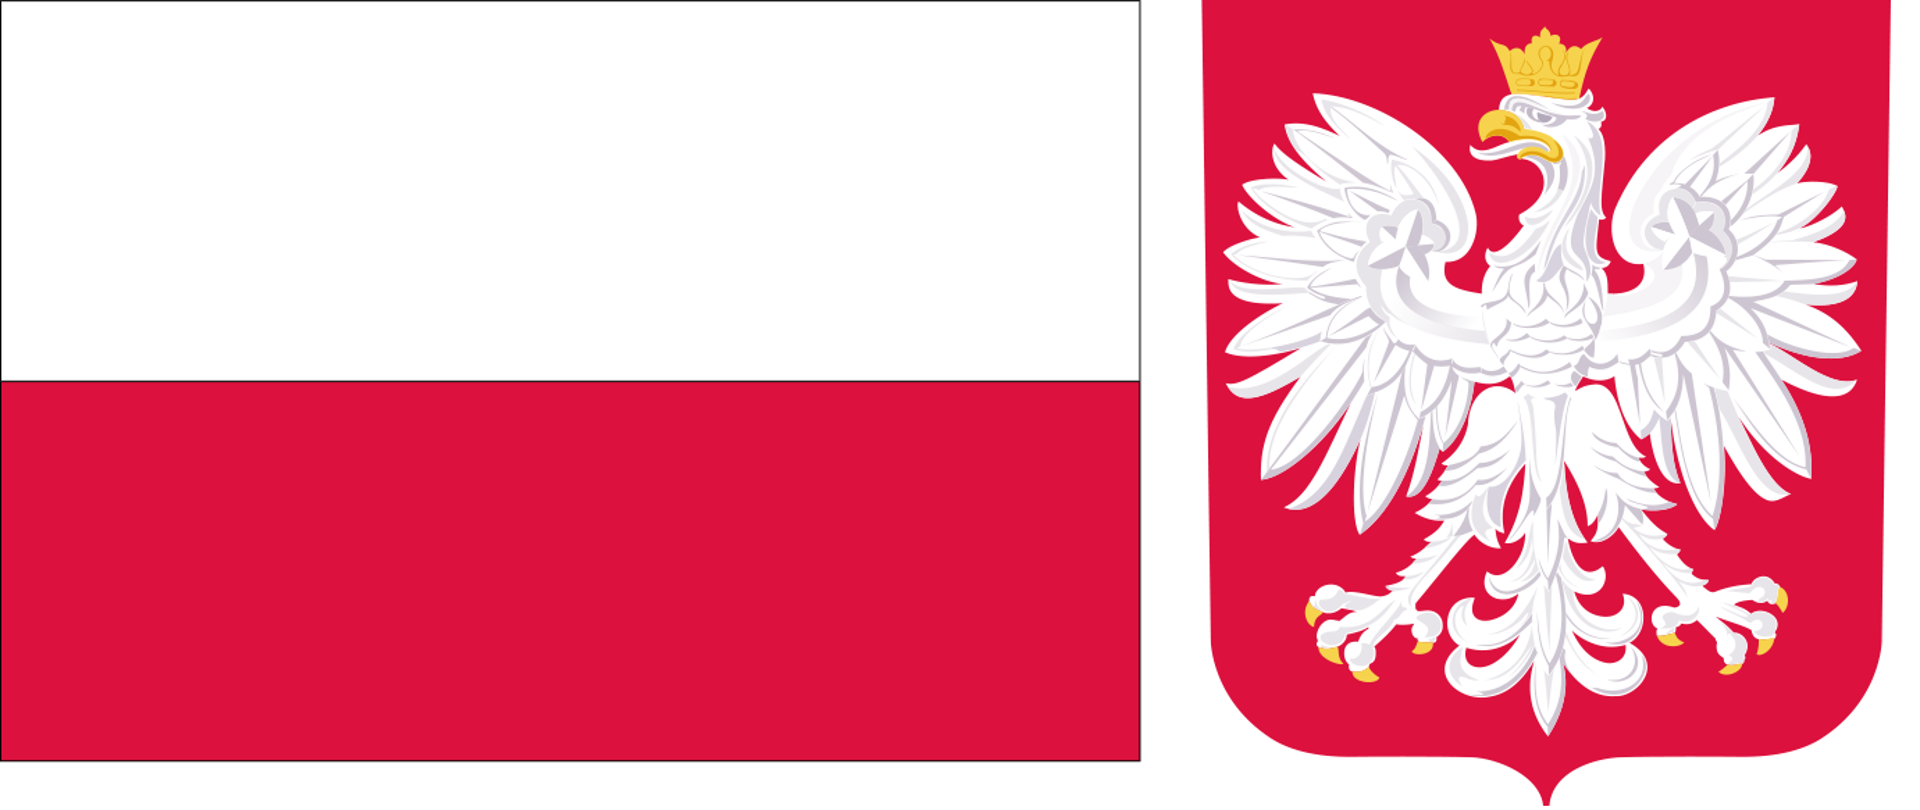 Flaga i Godło RP